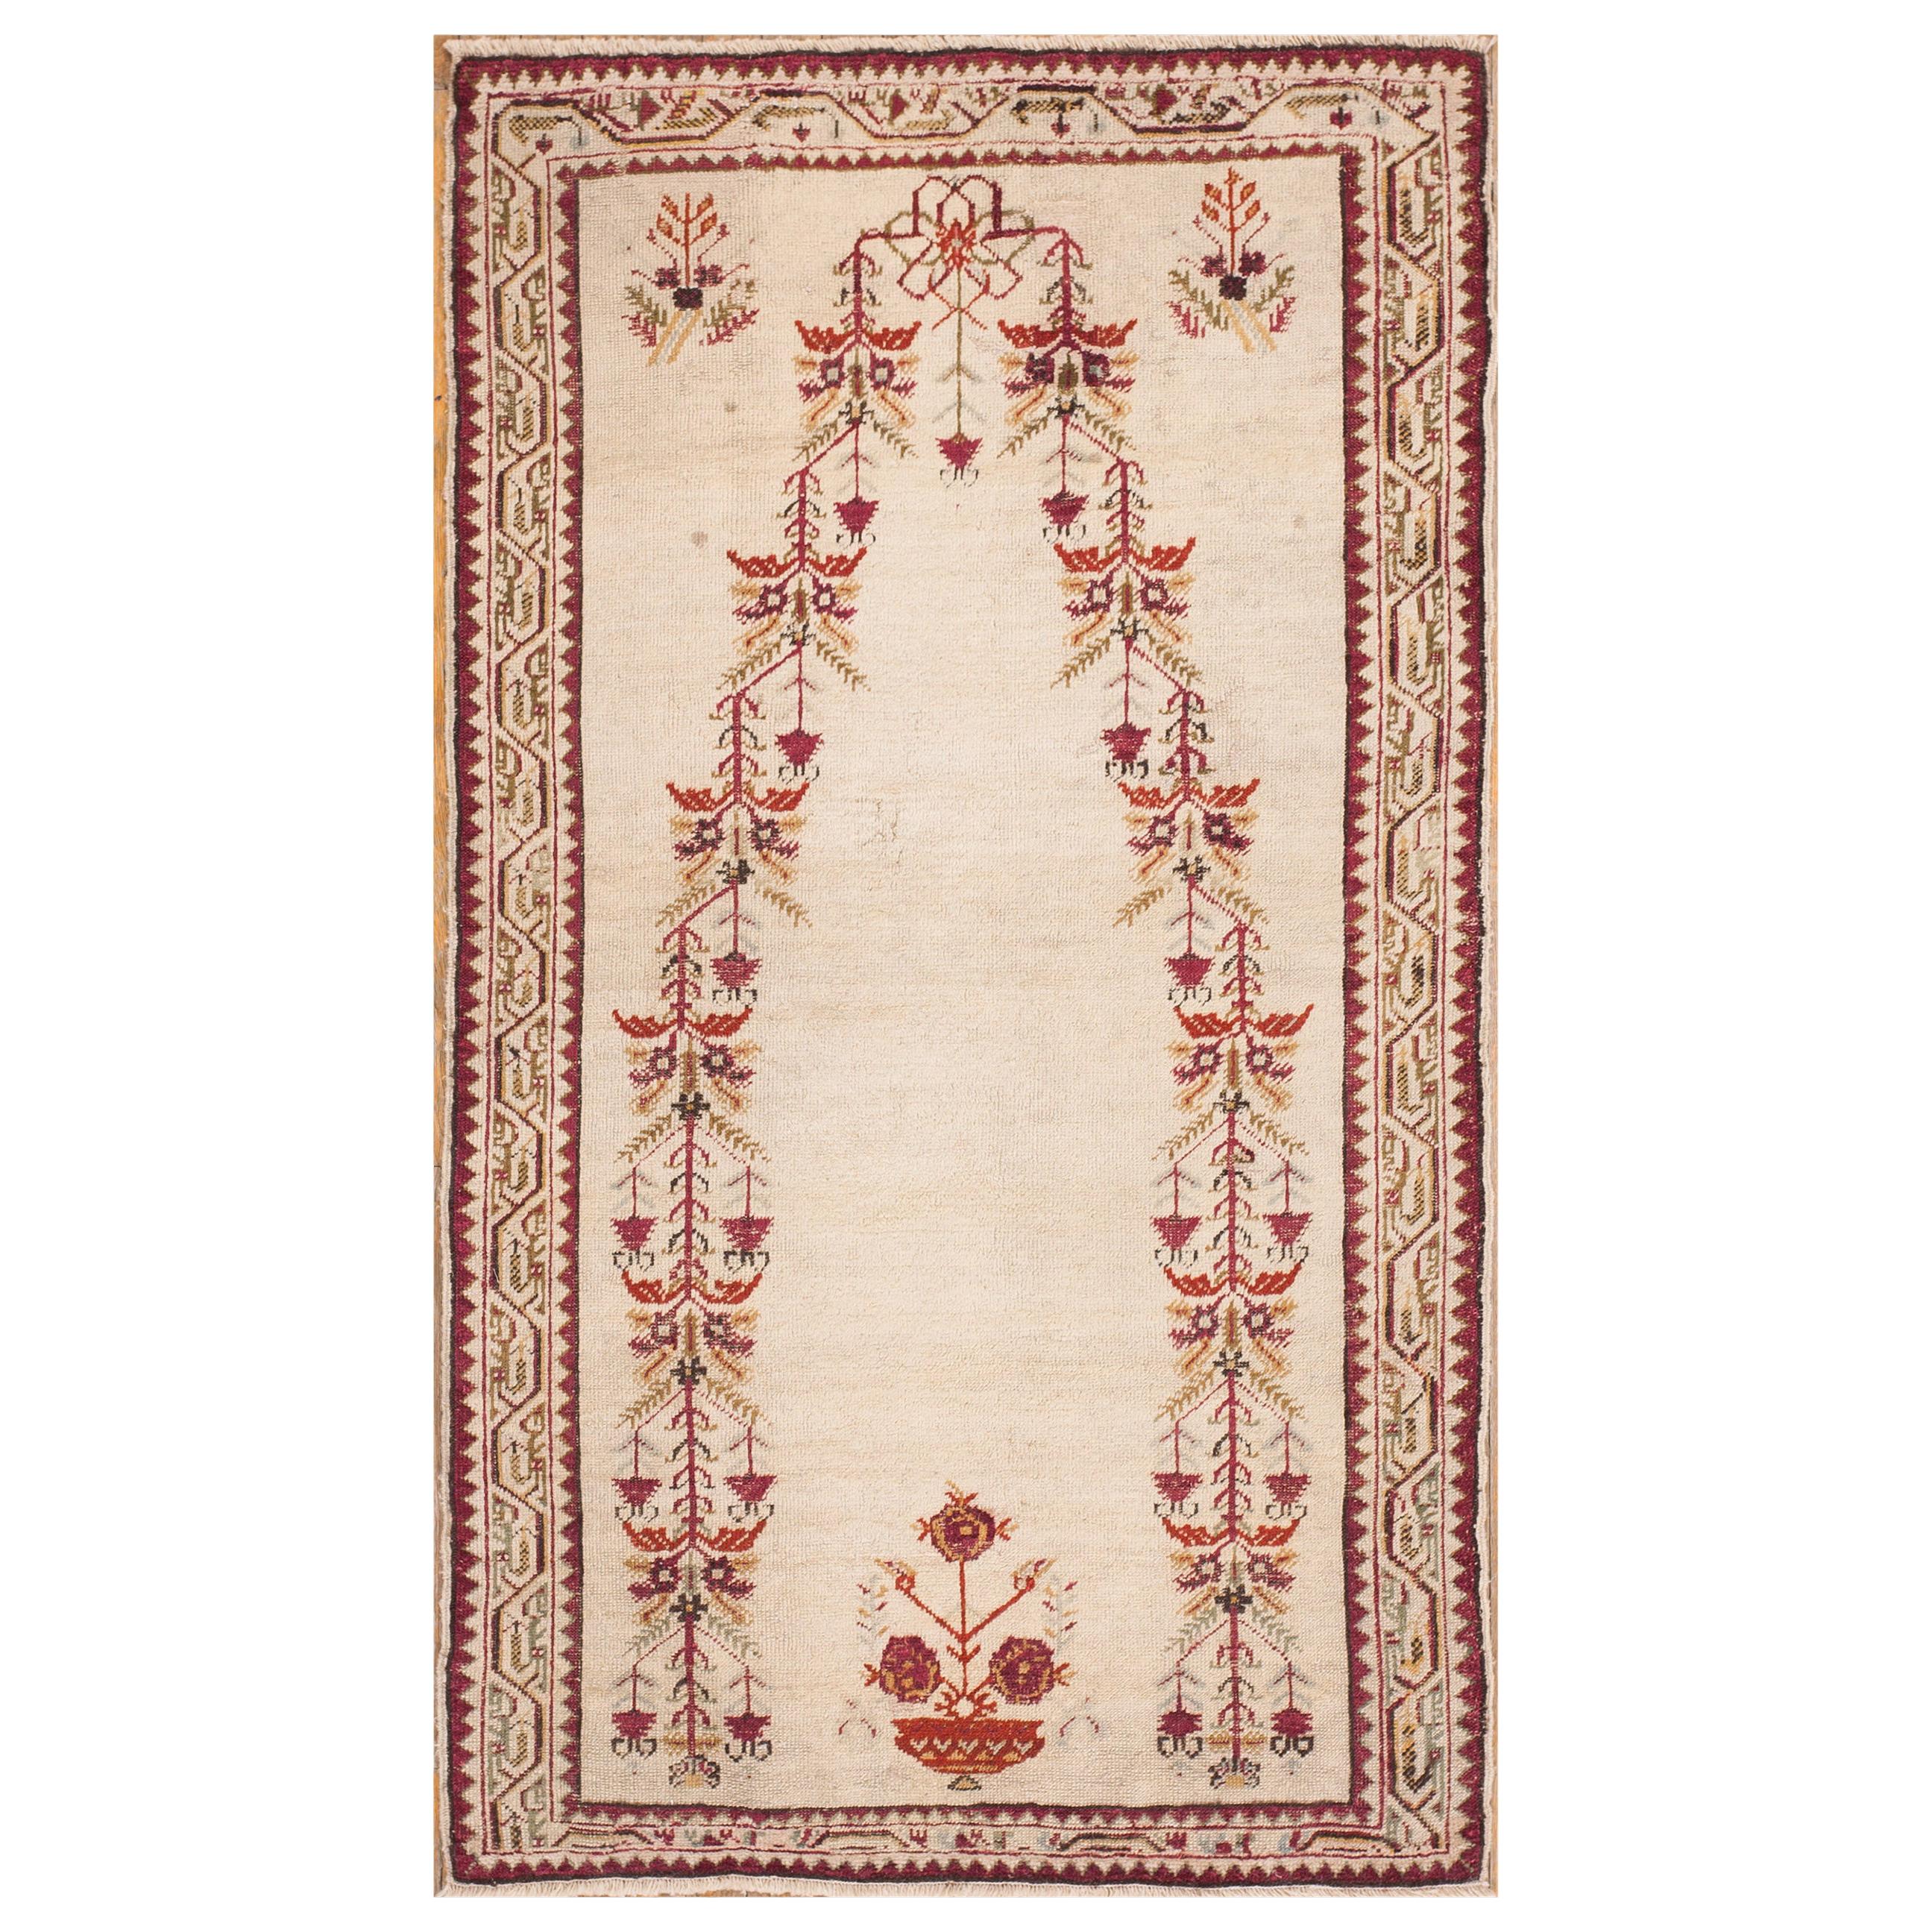 19th Century Turkish Central Anatolian Ghiordes Prayer Rug ( 3'3" x 5'8" ) For Sale